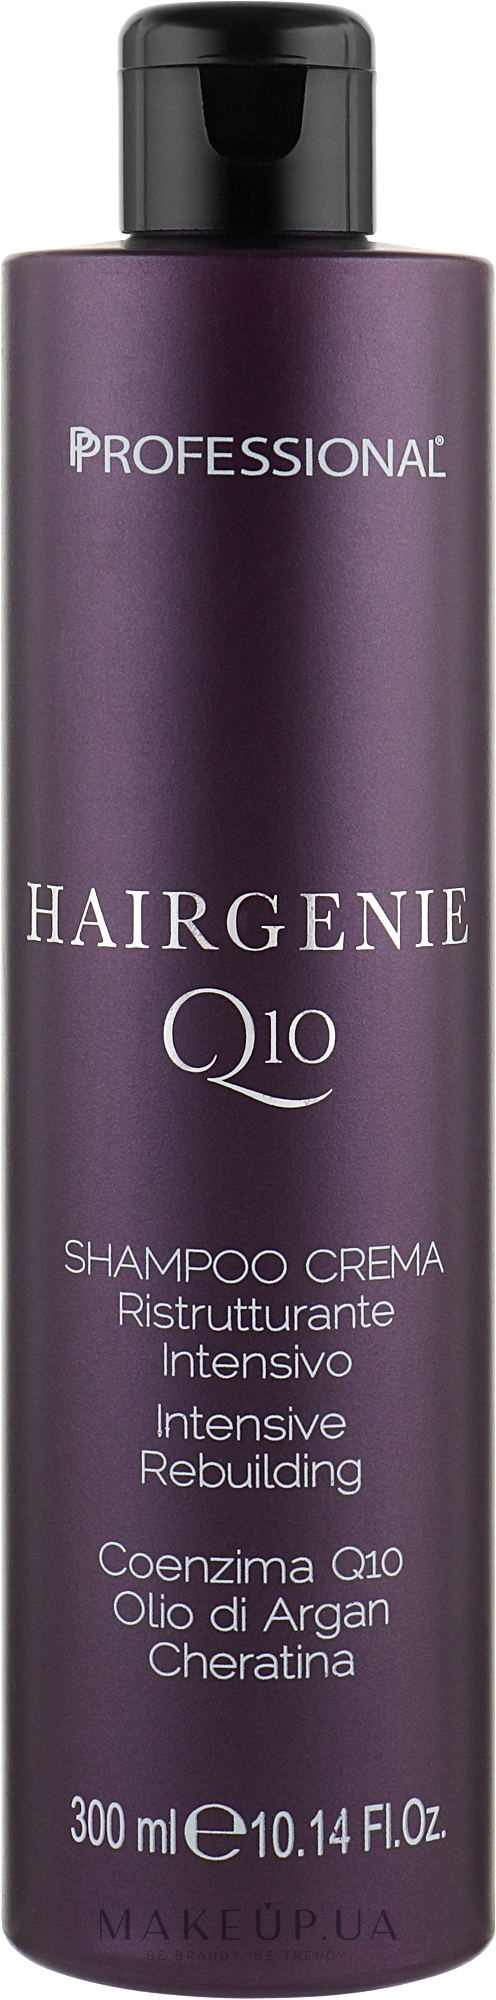 Шампунь-крем для восстановления волос - Professional Hairgenie Q10 Shampoo Cream — фото 300ml